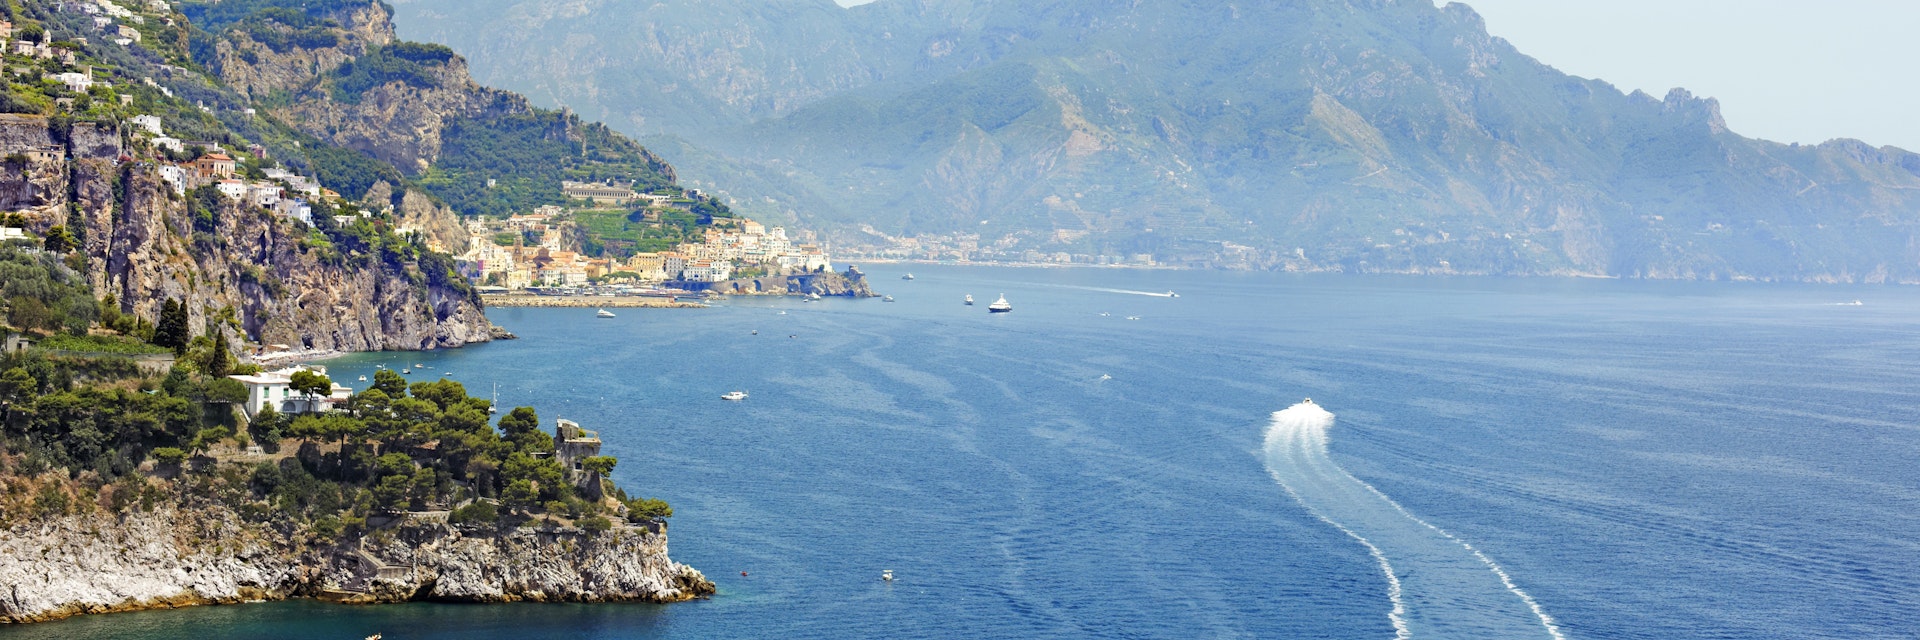 Amalfi Town on Tyrrhenian Sea seen from Conca dei Marini.